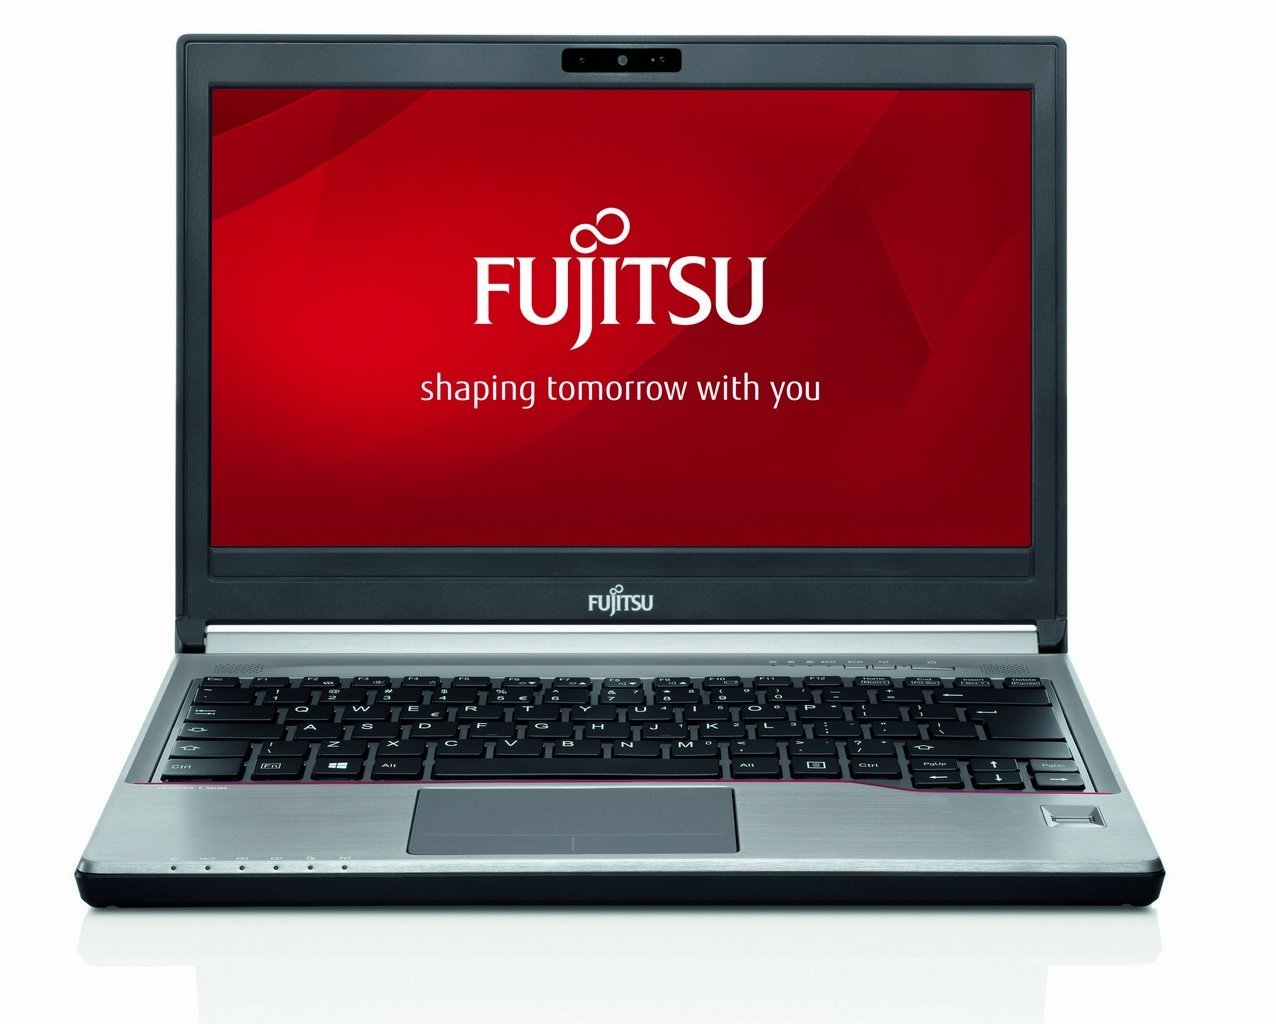 Fujitsu Lifebook E753 - Notebookcheck.net External Reviews